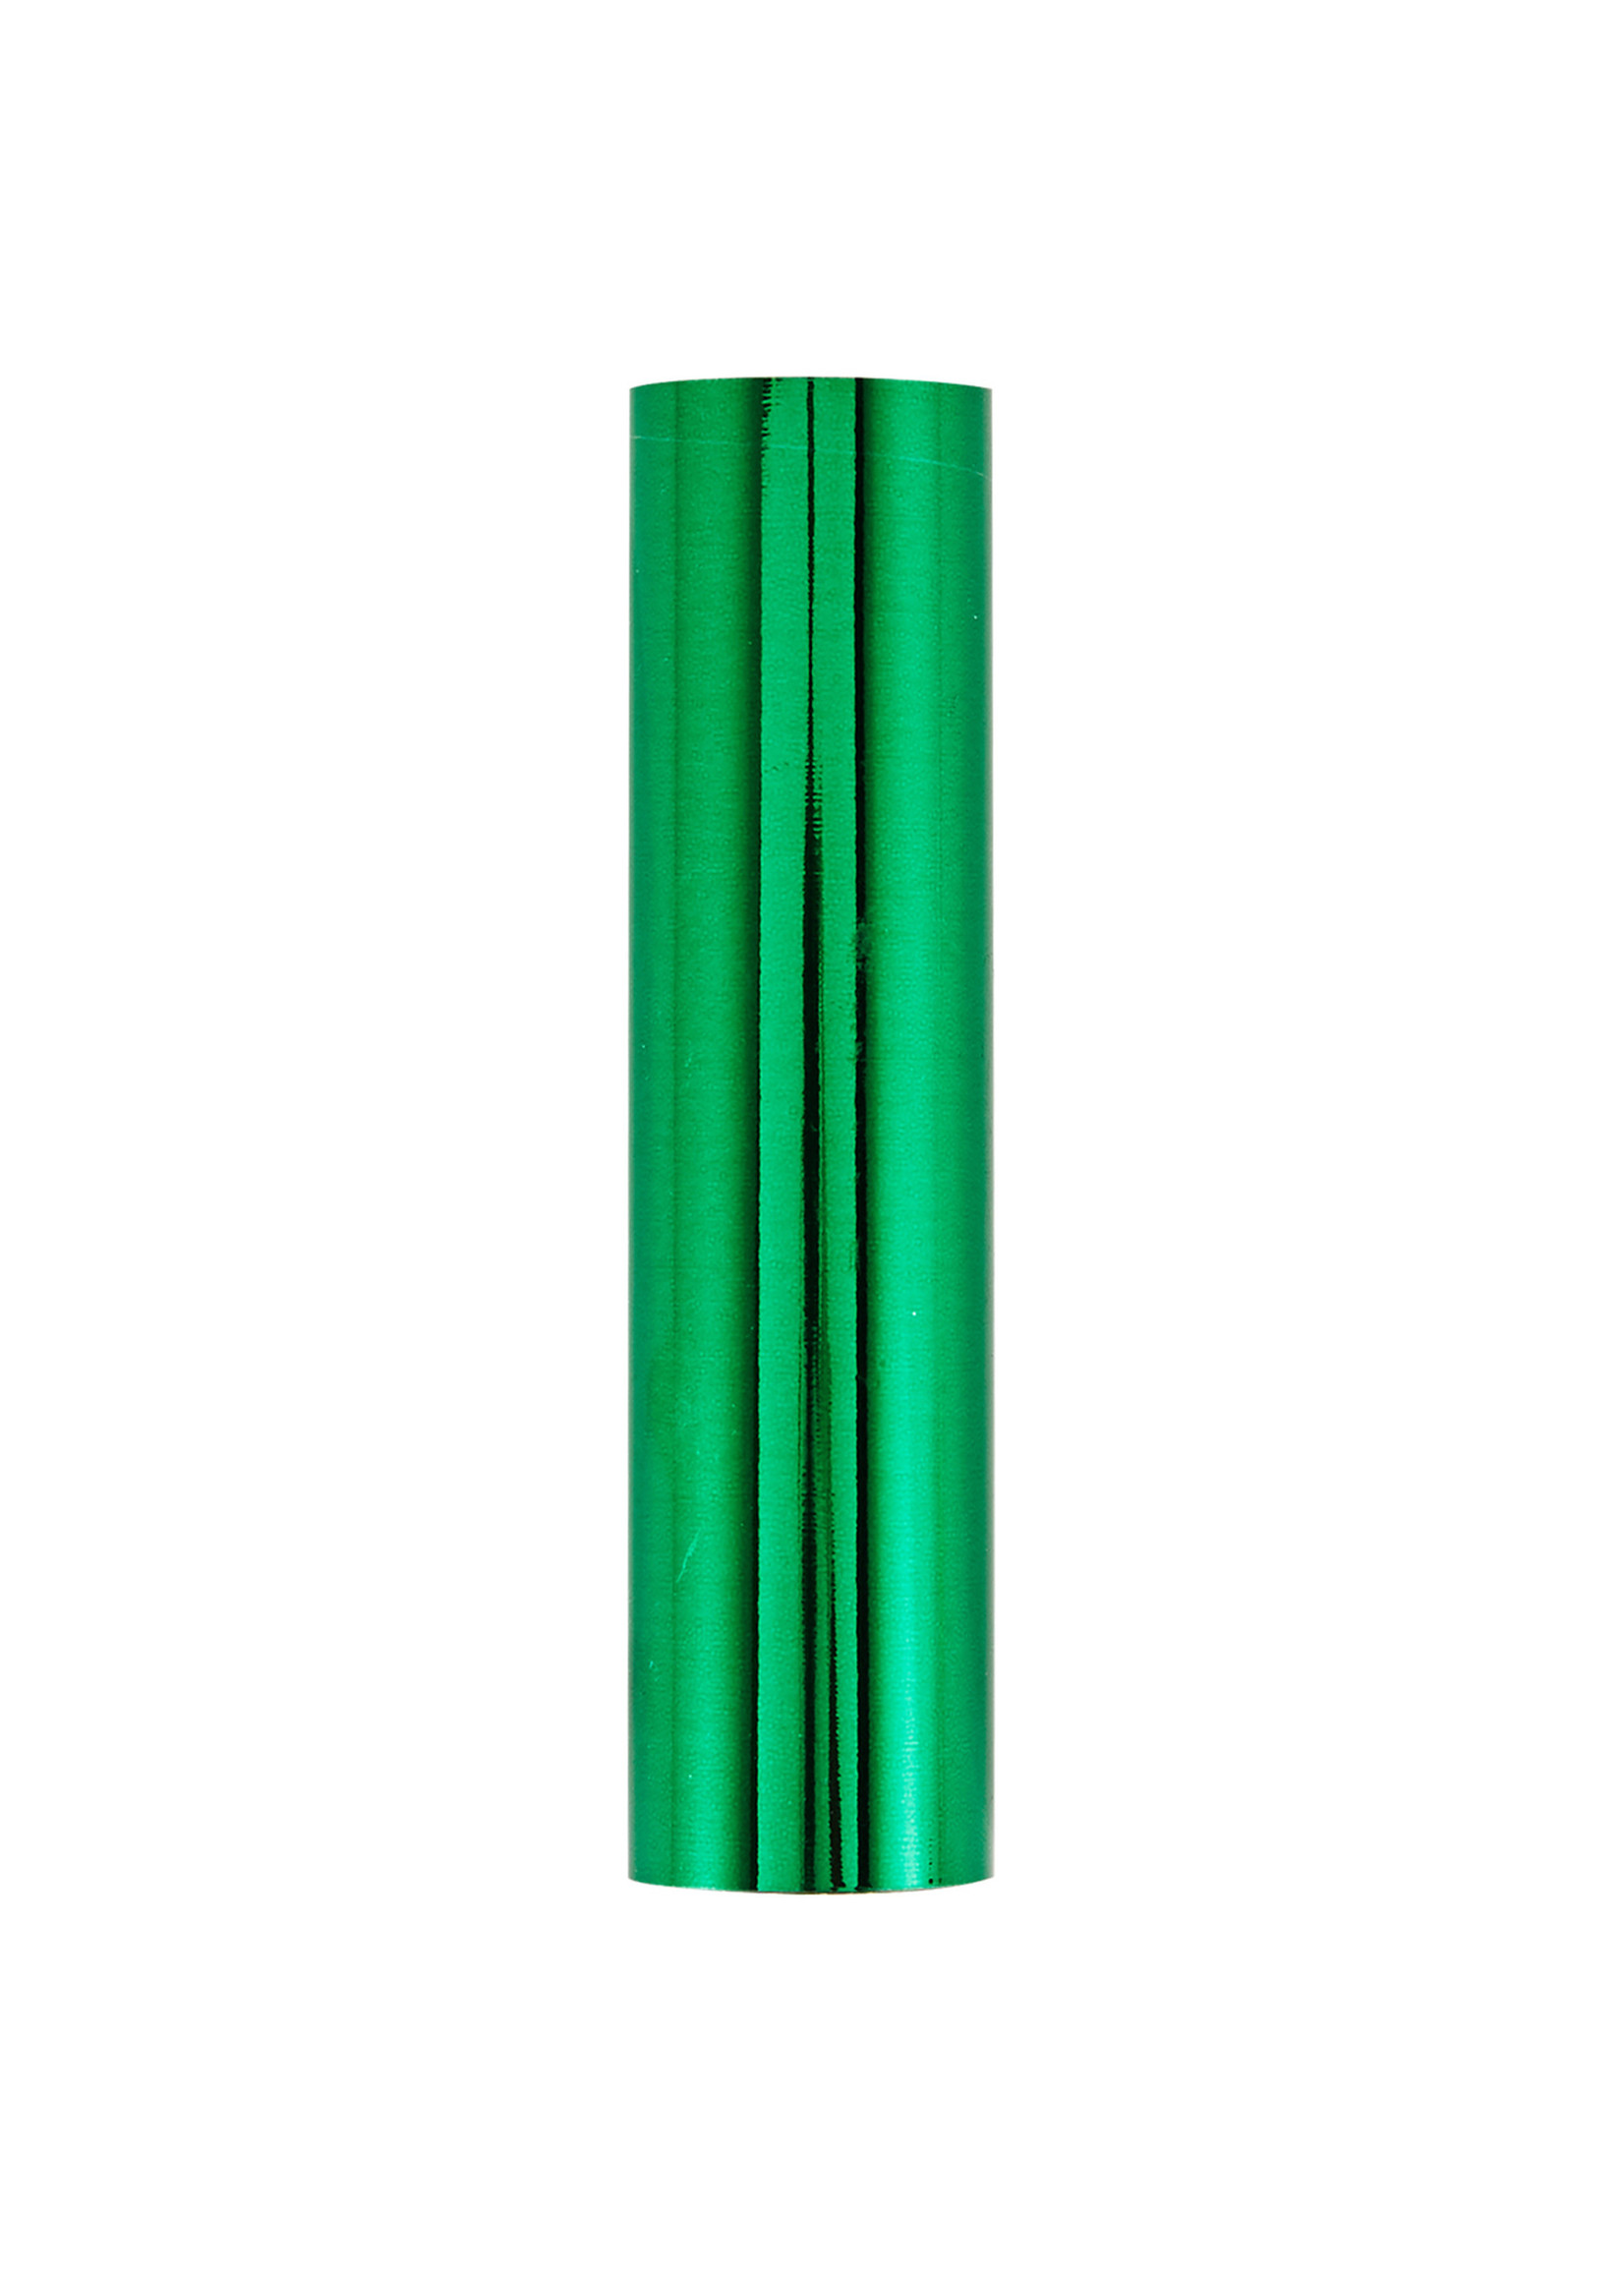 spellbinders Glimmer Foil: Veridian Green